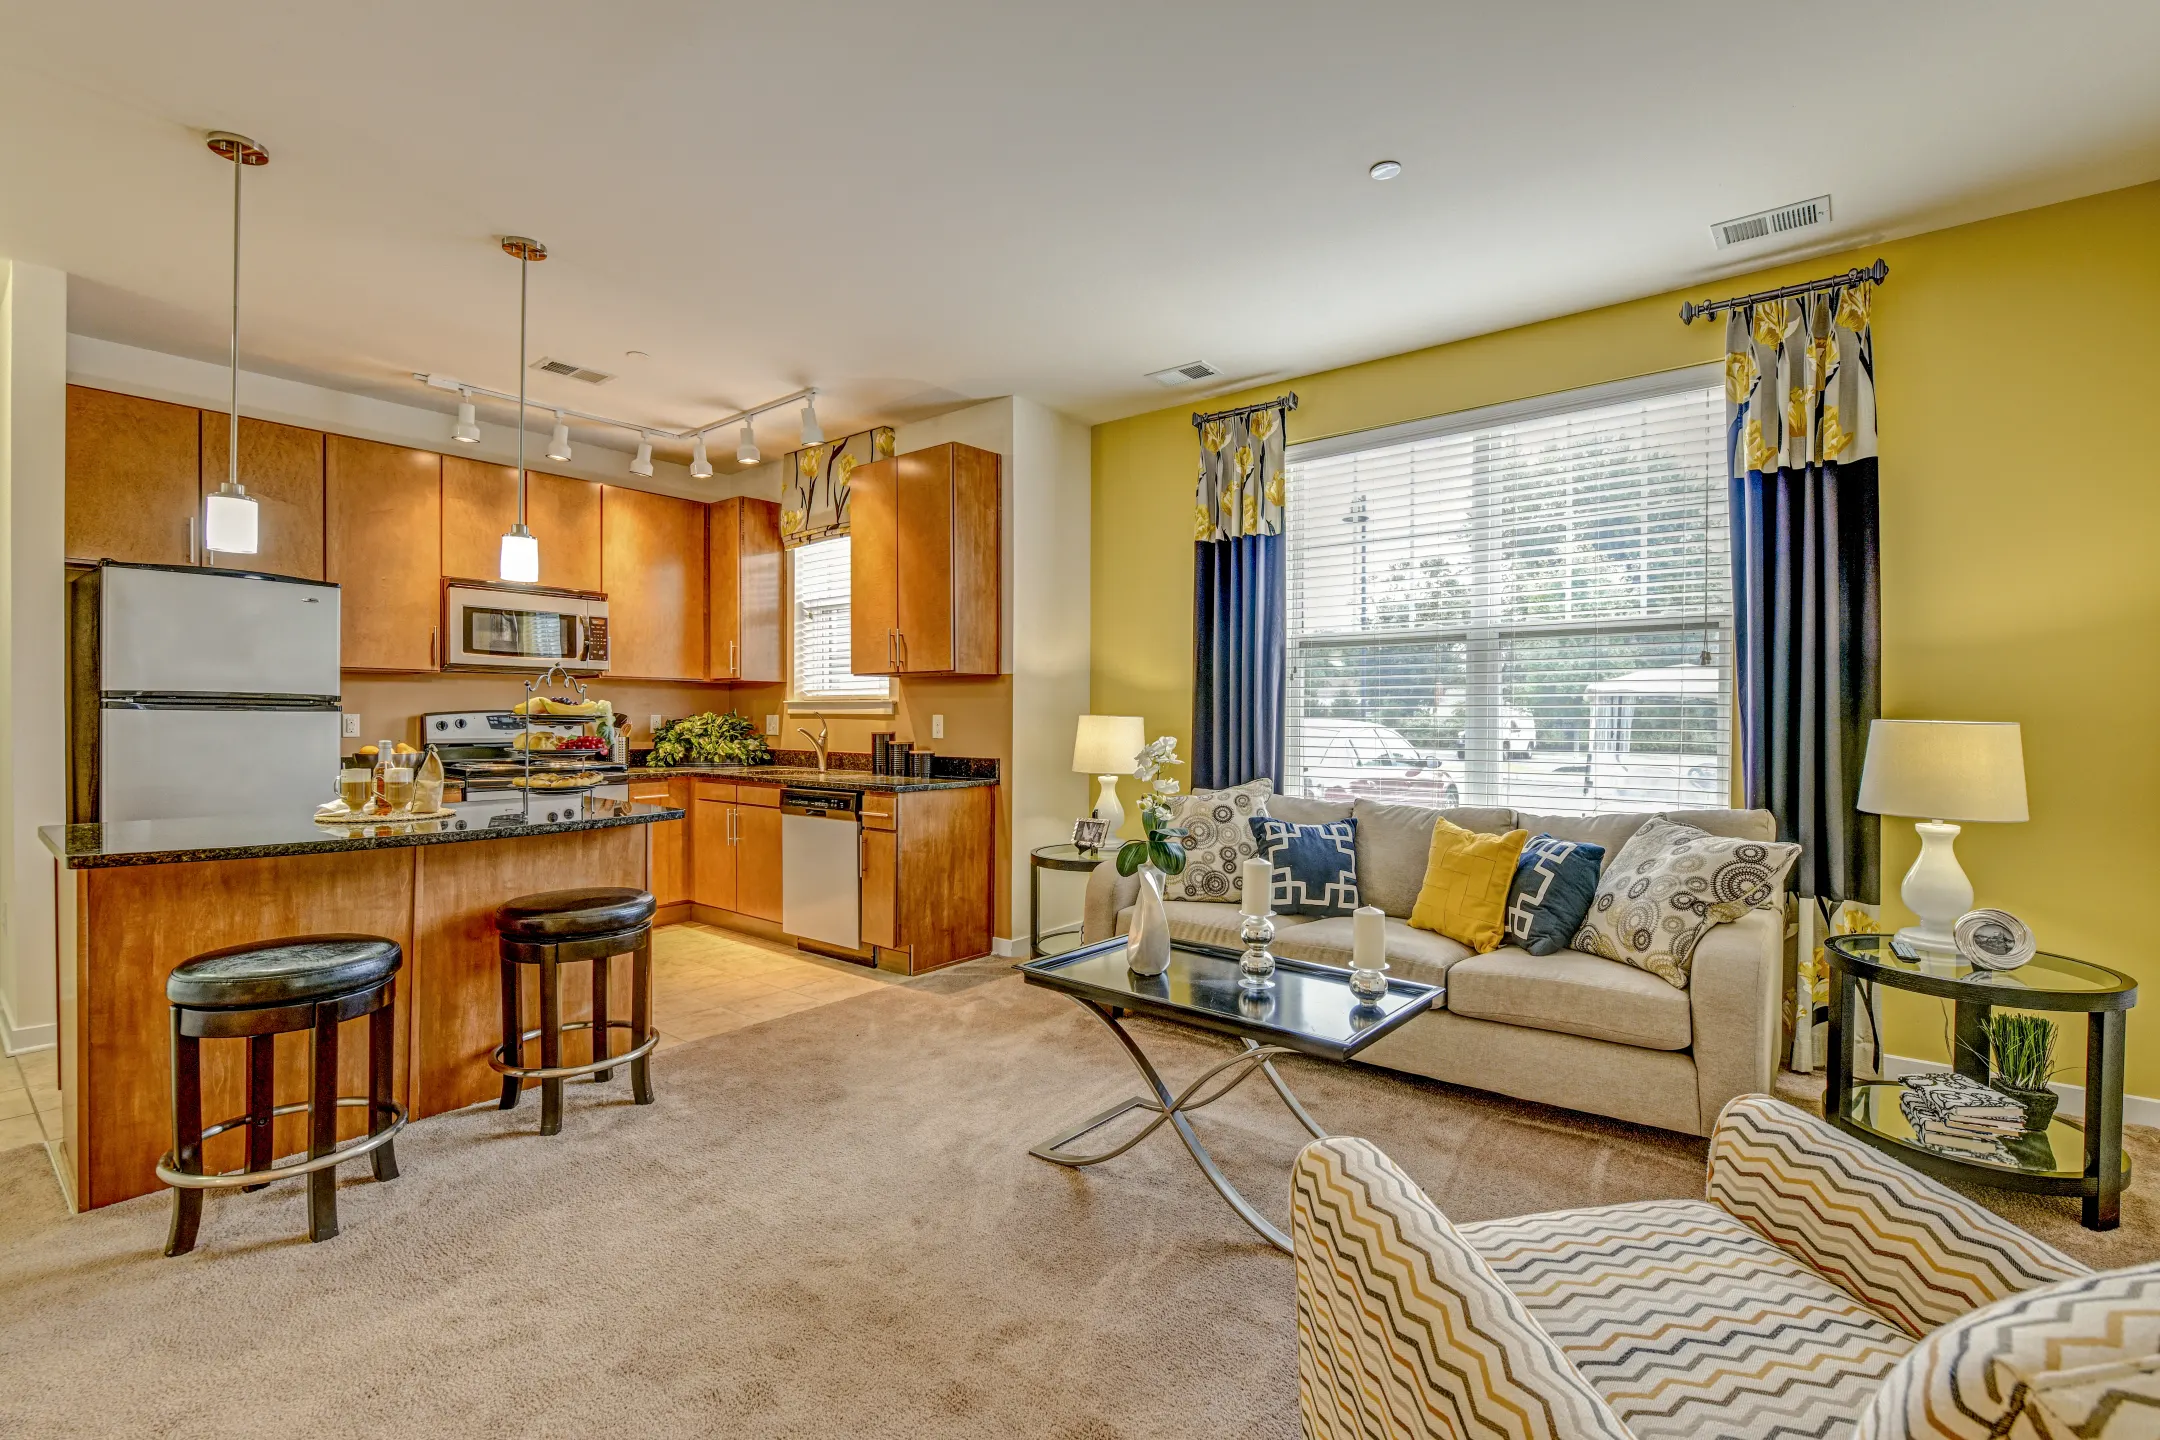 Living Room - Dwell Luxury Apartments - Cherry Hill, NJ